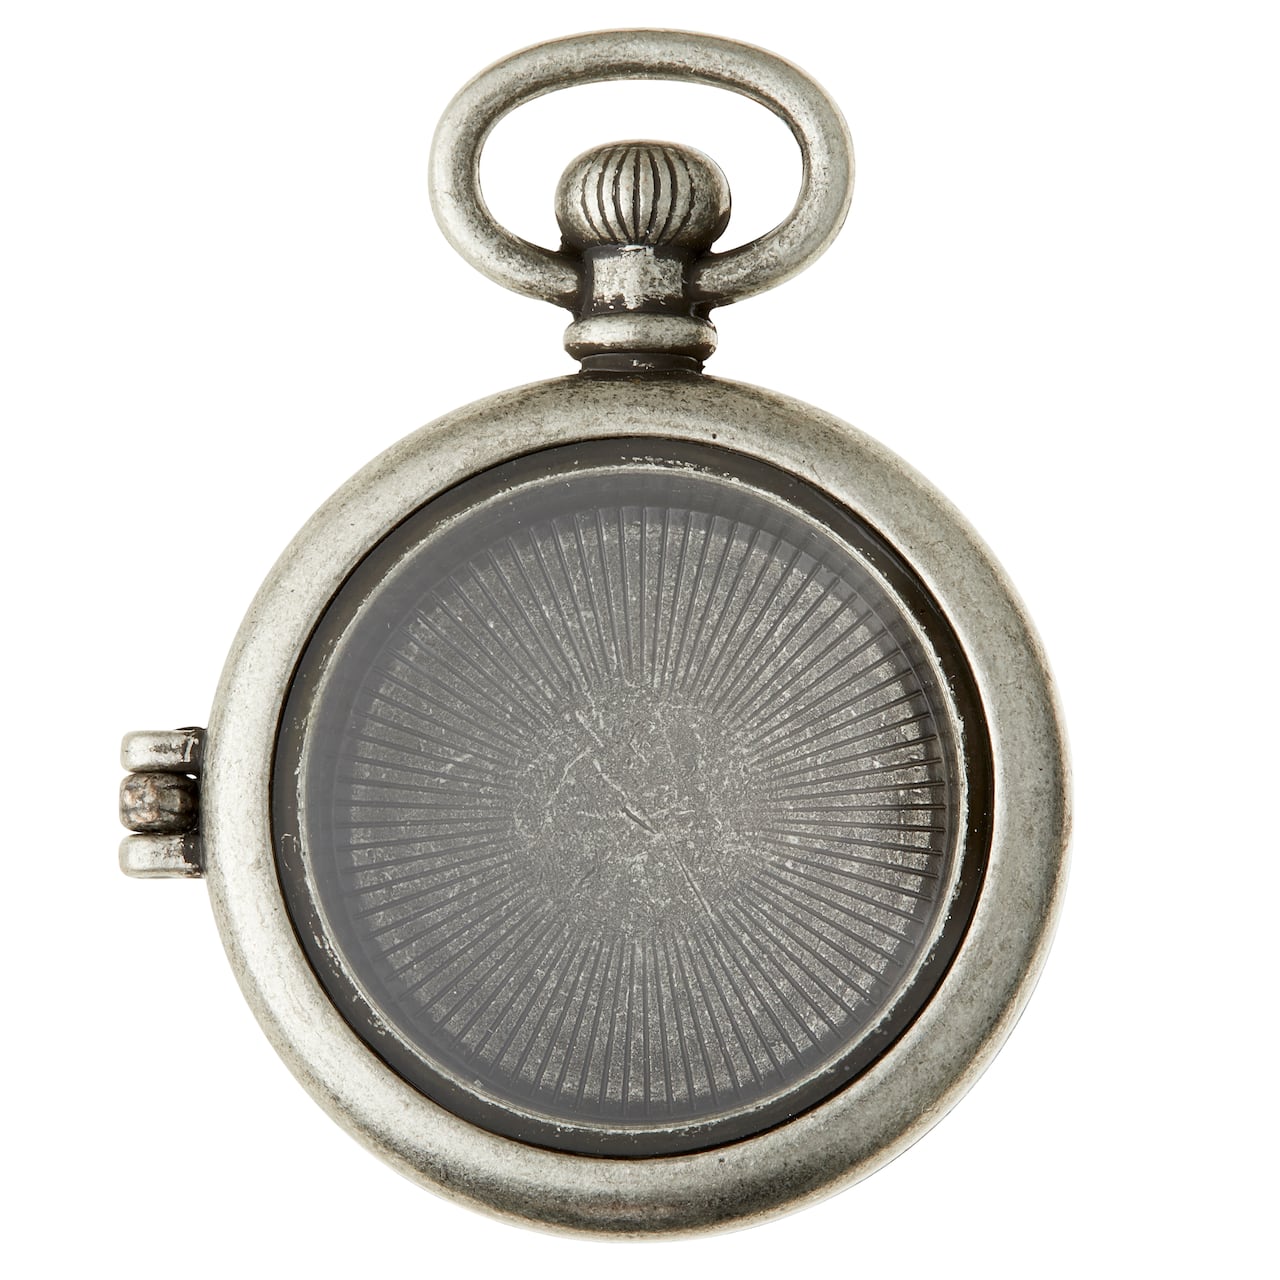 Found Objects&#x2122; Pocket Watch Frame Locket by Bead Landing&#x2122;